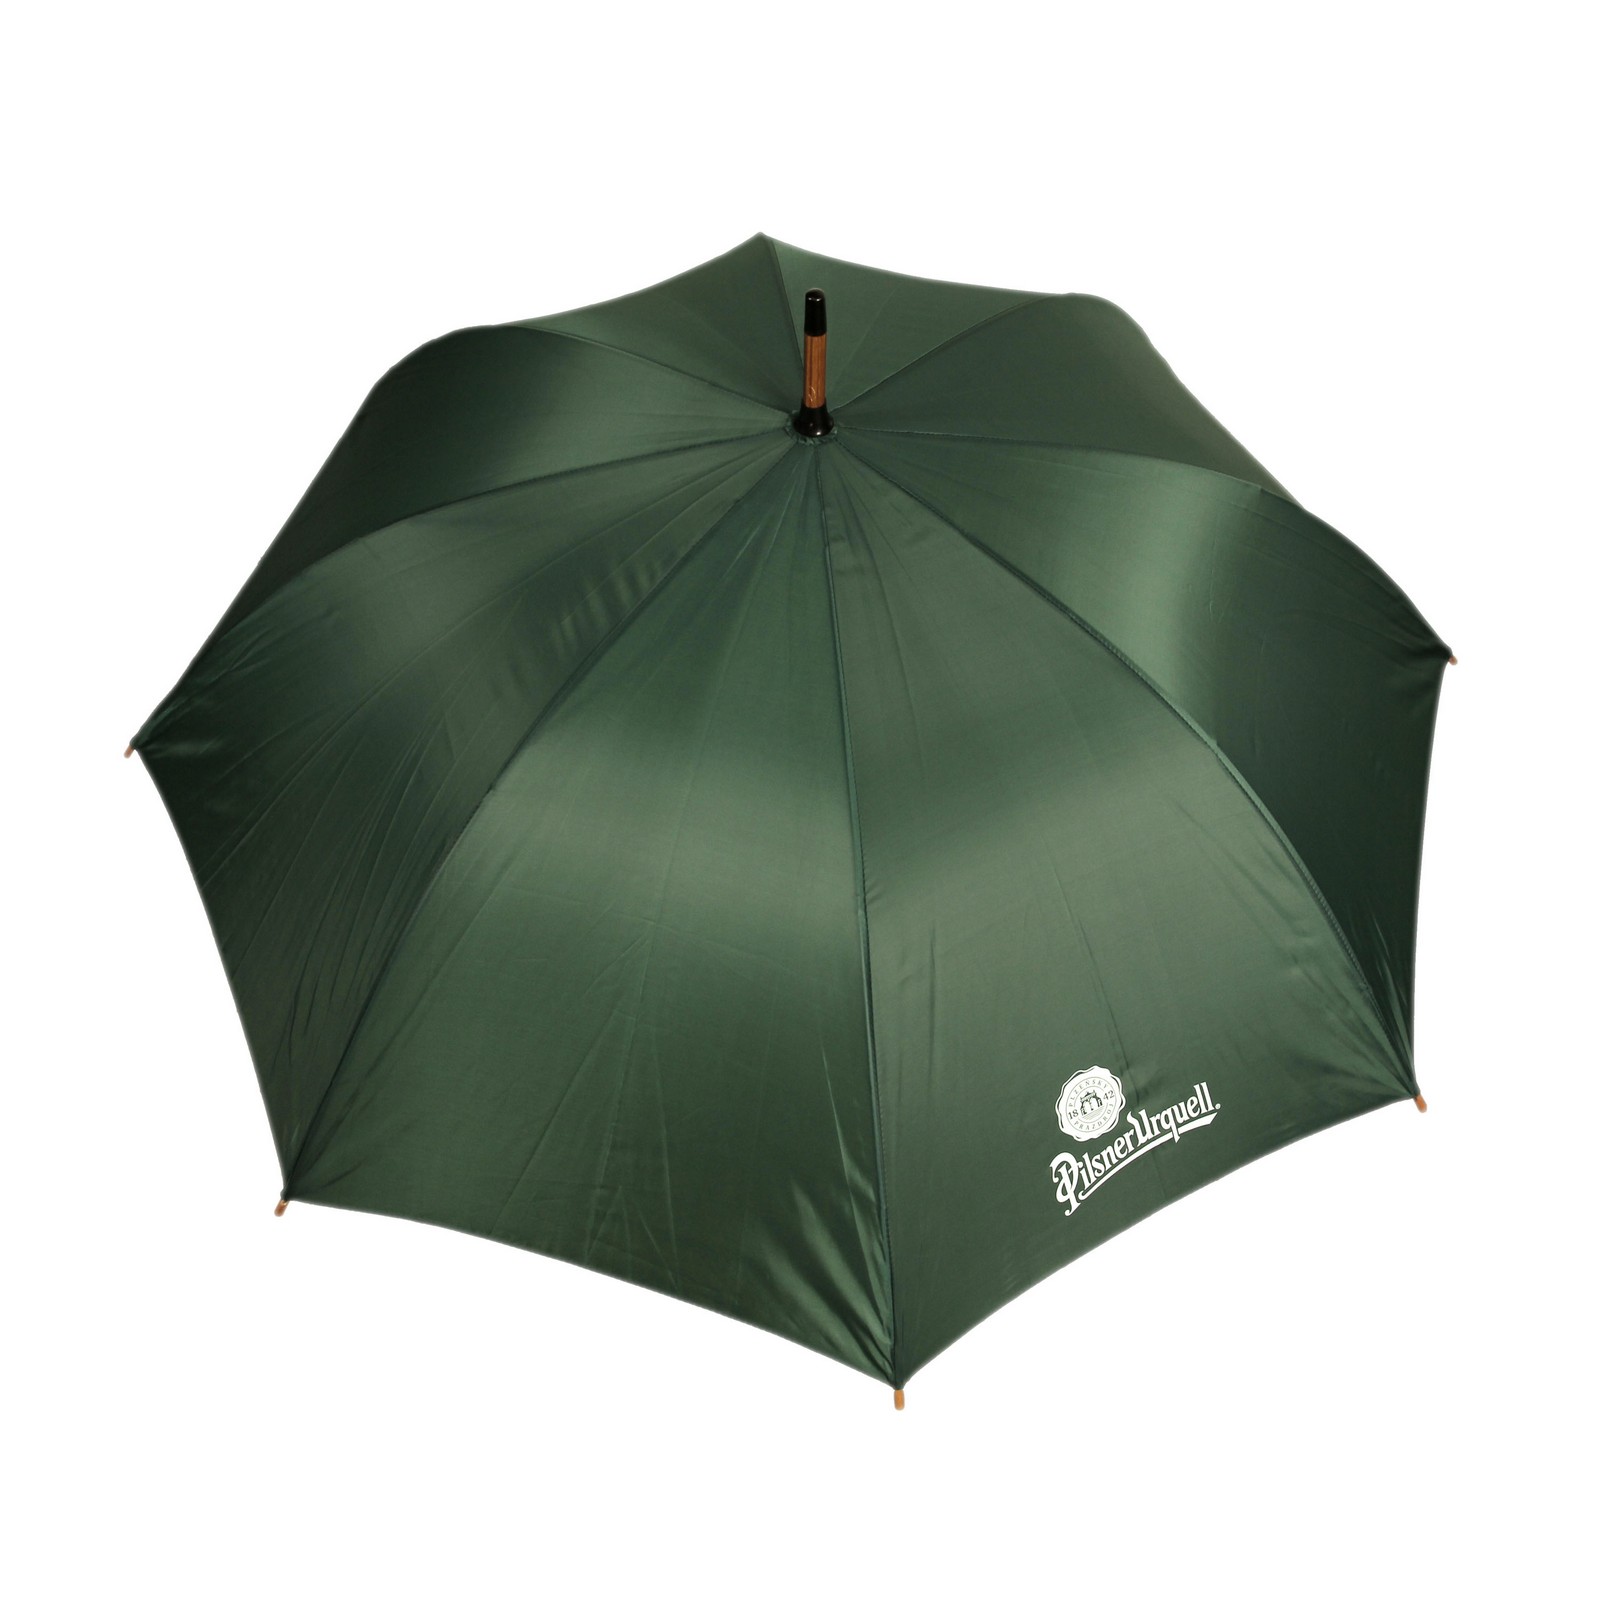 Pilsner Urquell umbrella - large